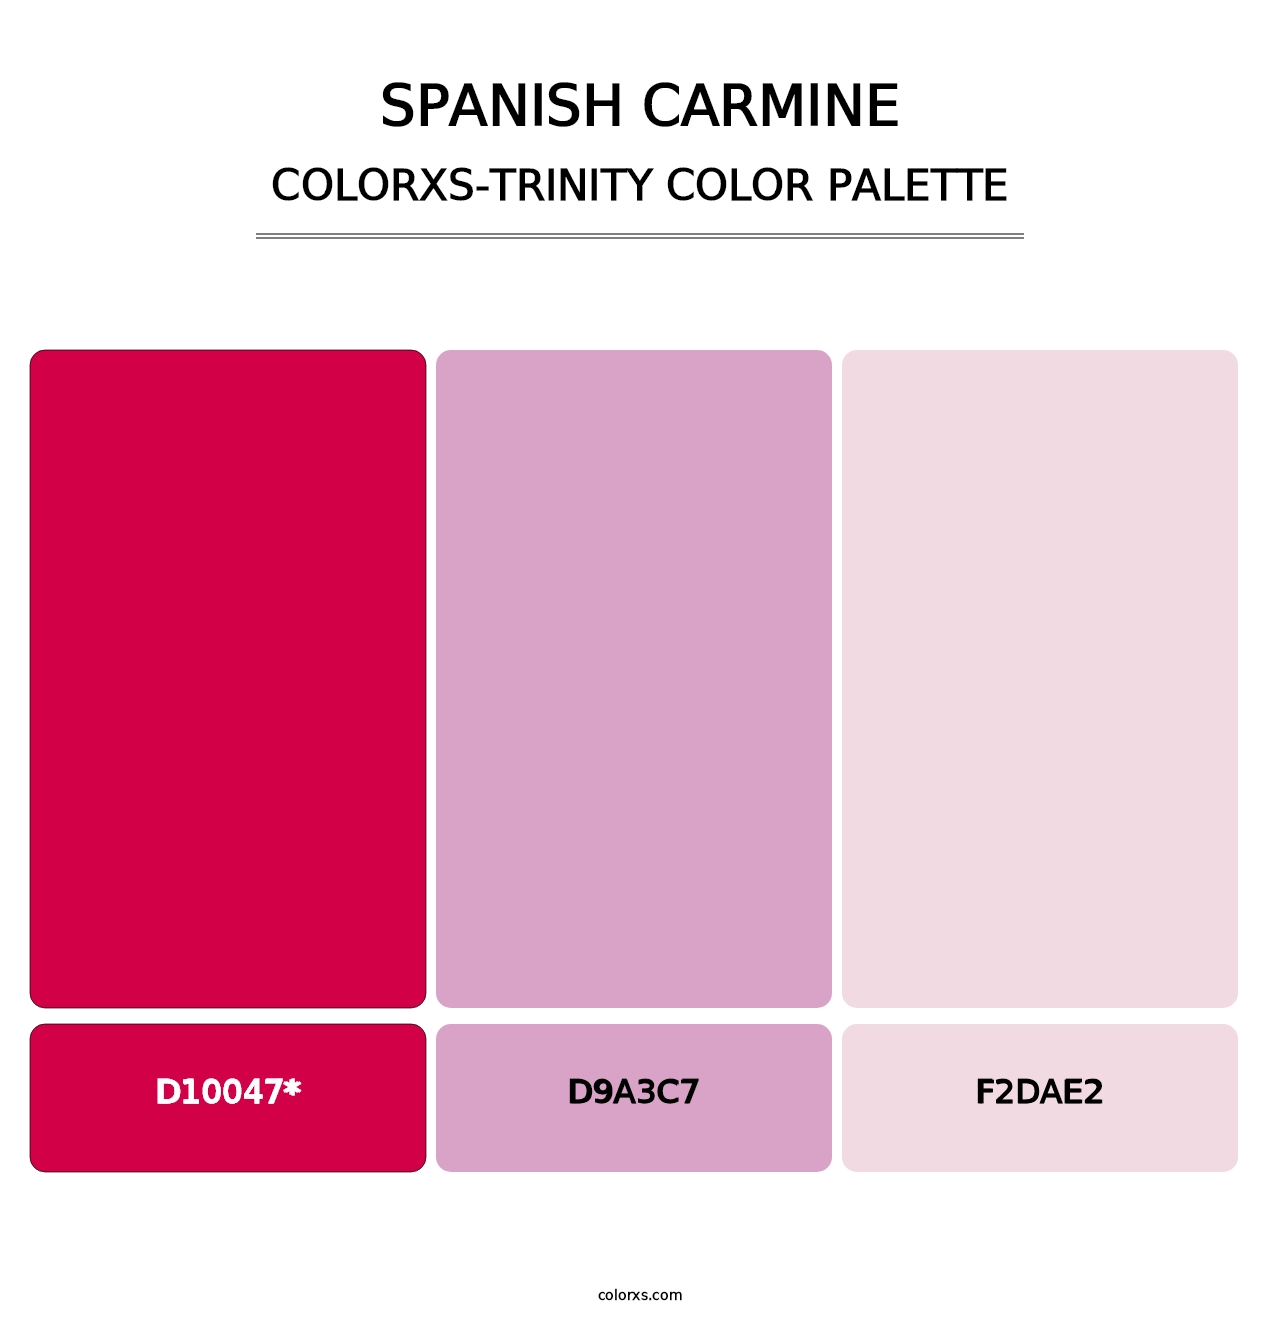 Spanish Carmine - Colorxs Trinity Palette